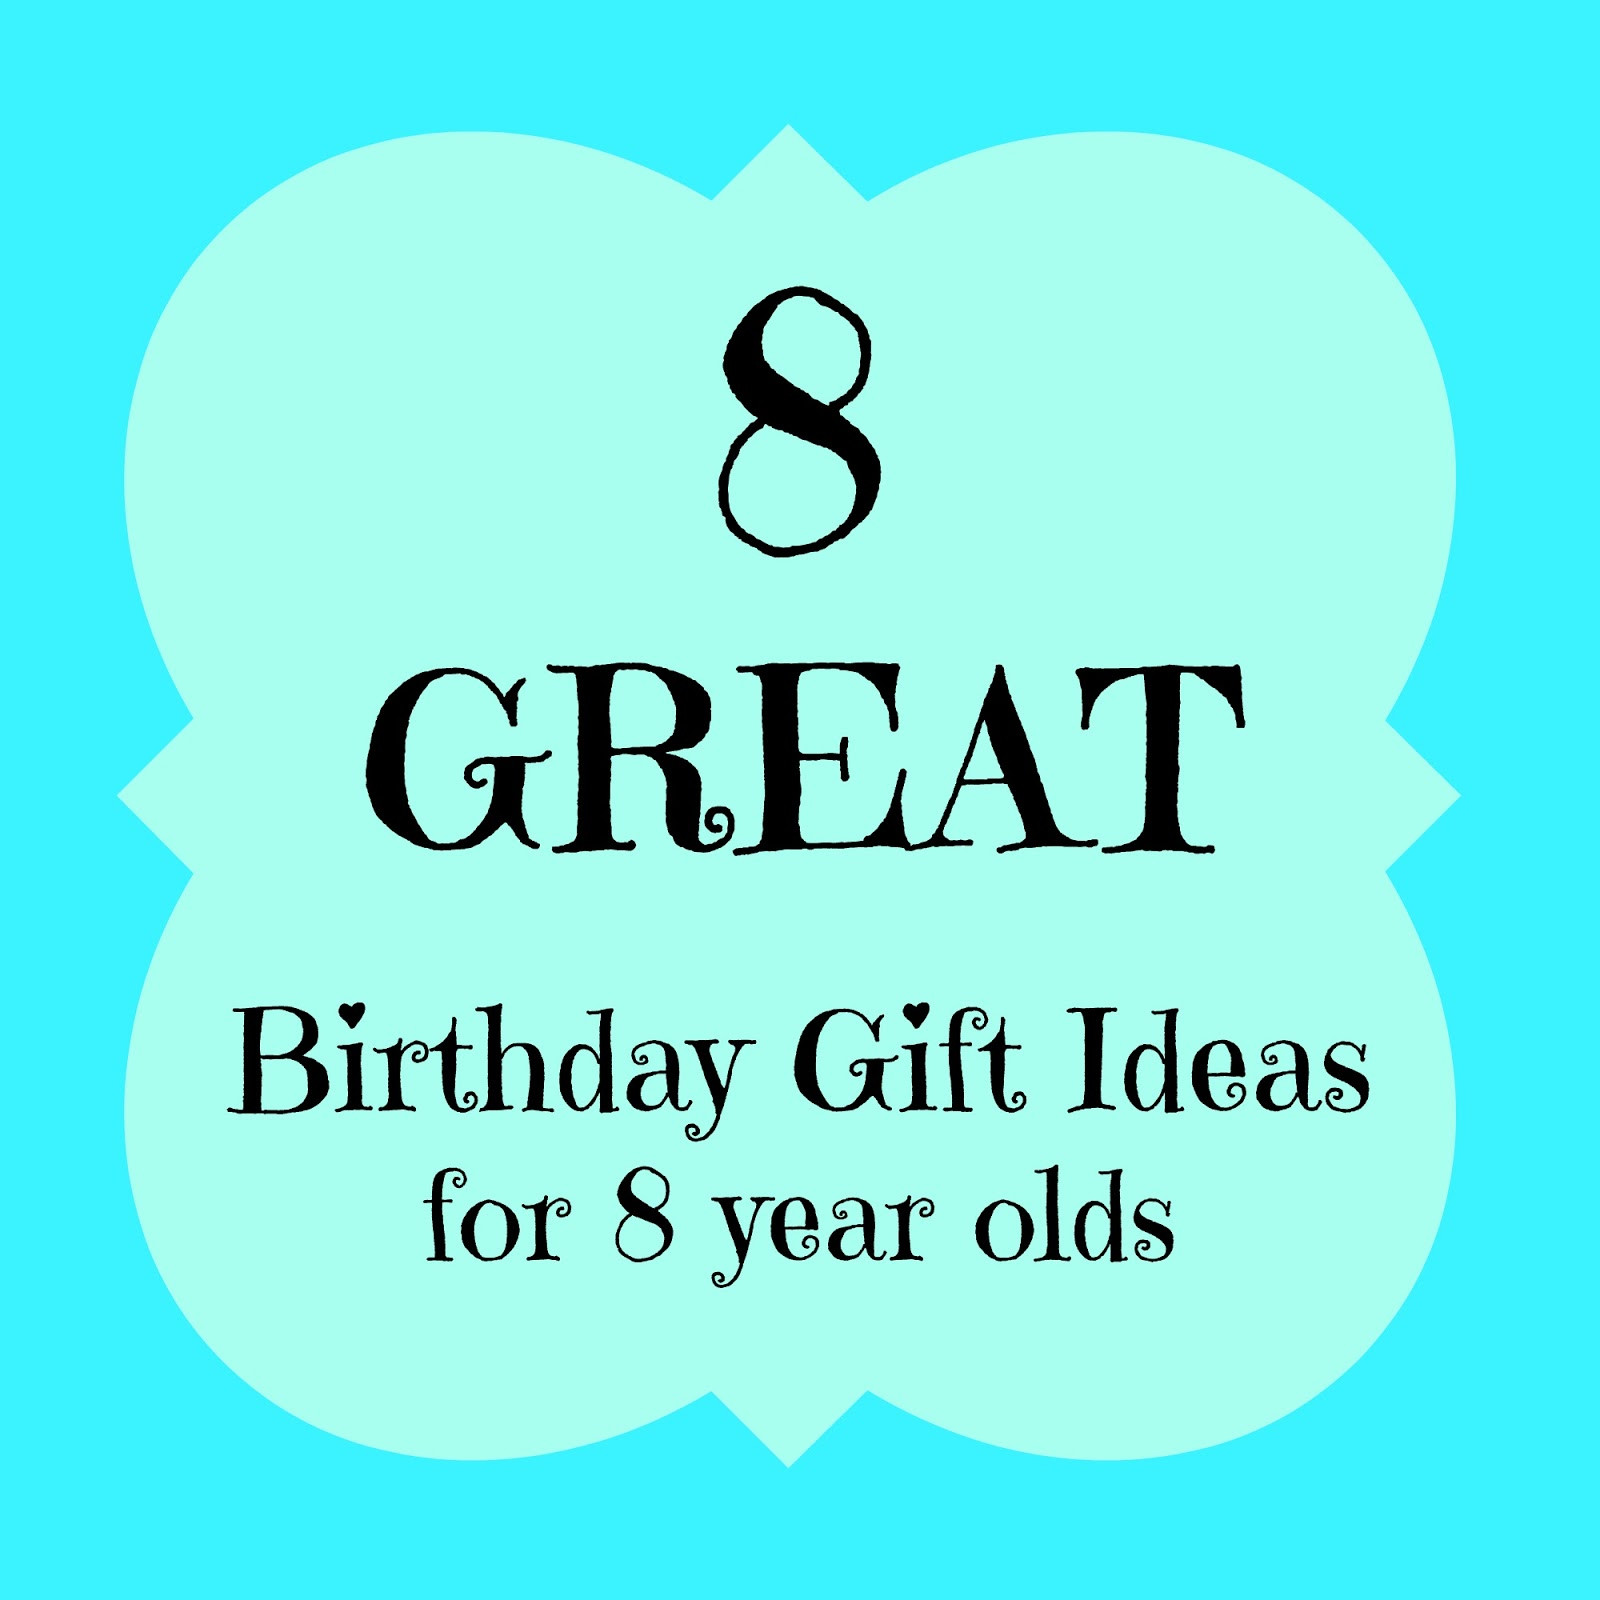 8 Year Old Birthday Gift Ideas
 Magnolia Mamas 8 GREAT Birthday Gift Ideas For 8 Year Olds